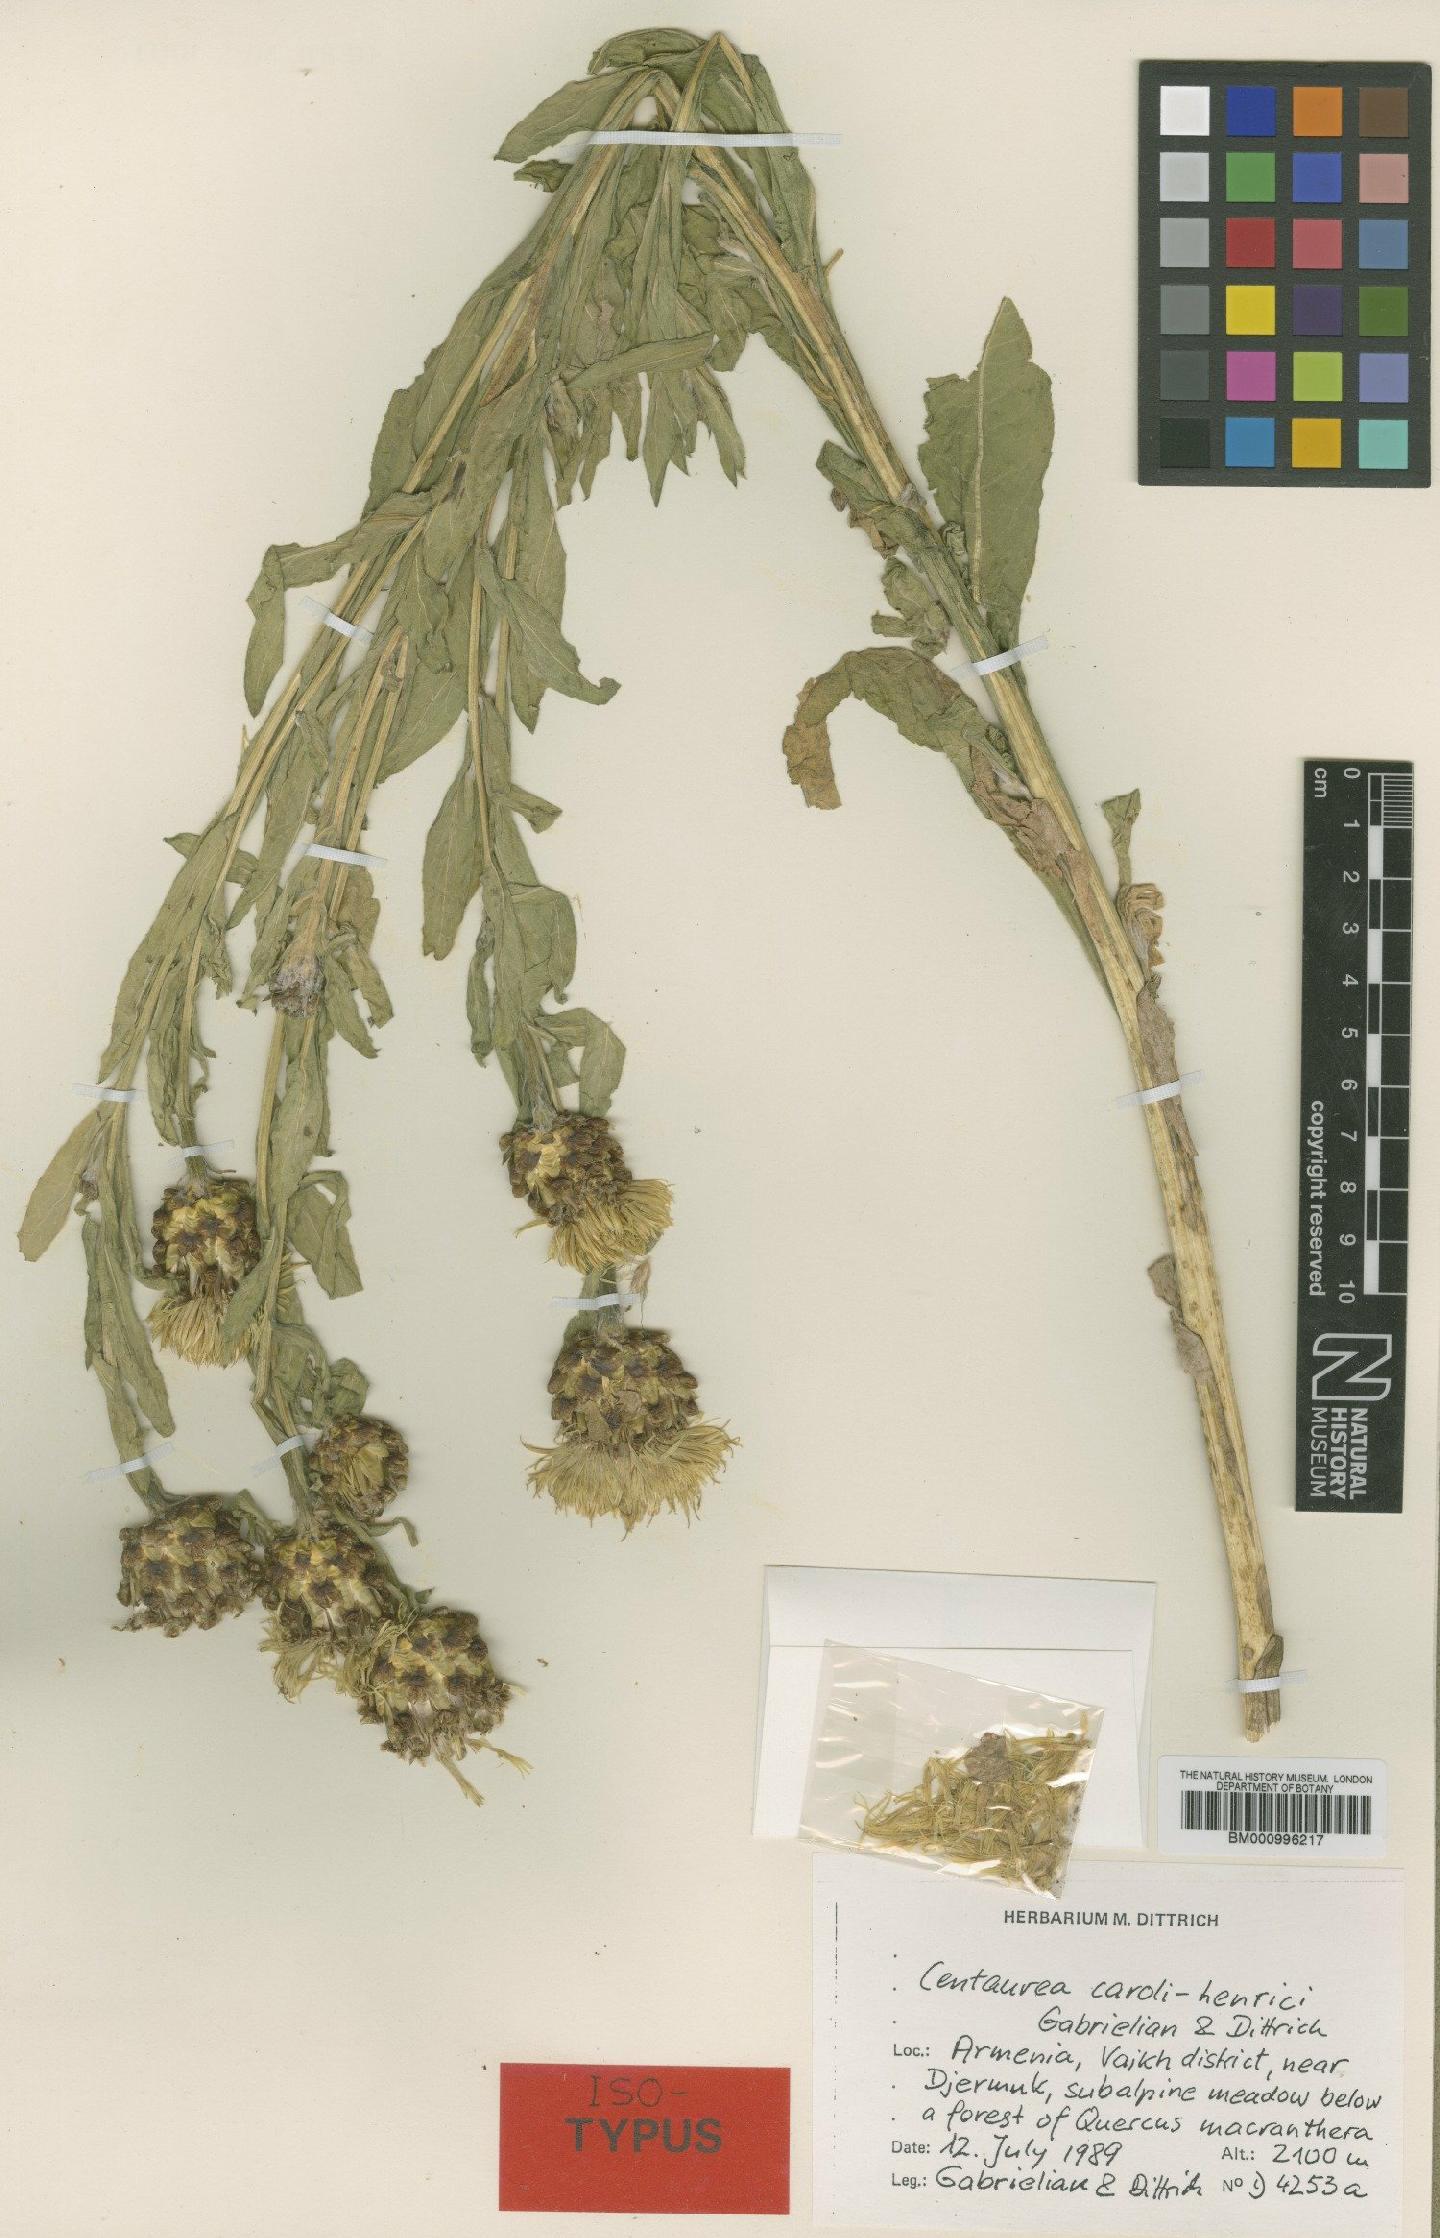 To NHMUK collection (Centaurea caroli-henrici Gabrielian & Dittrich; Type; NHMUK:ecatalogue:480202)